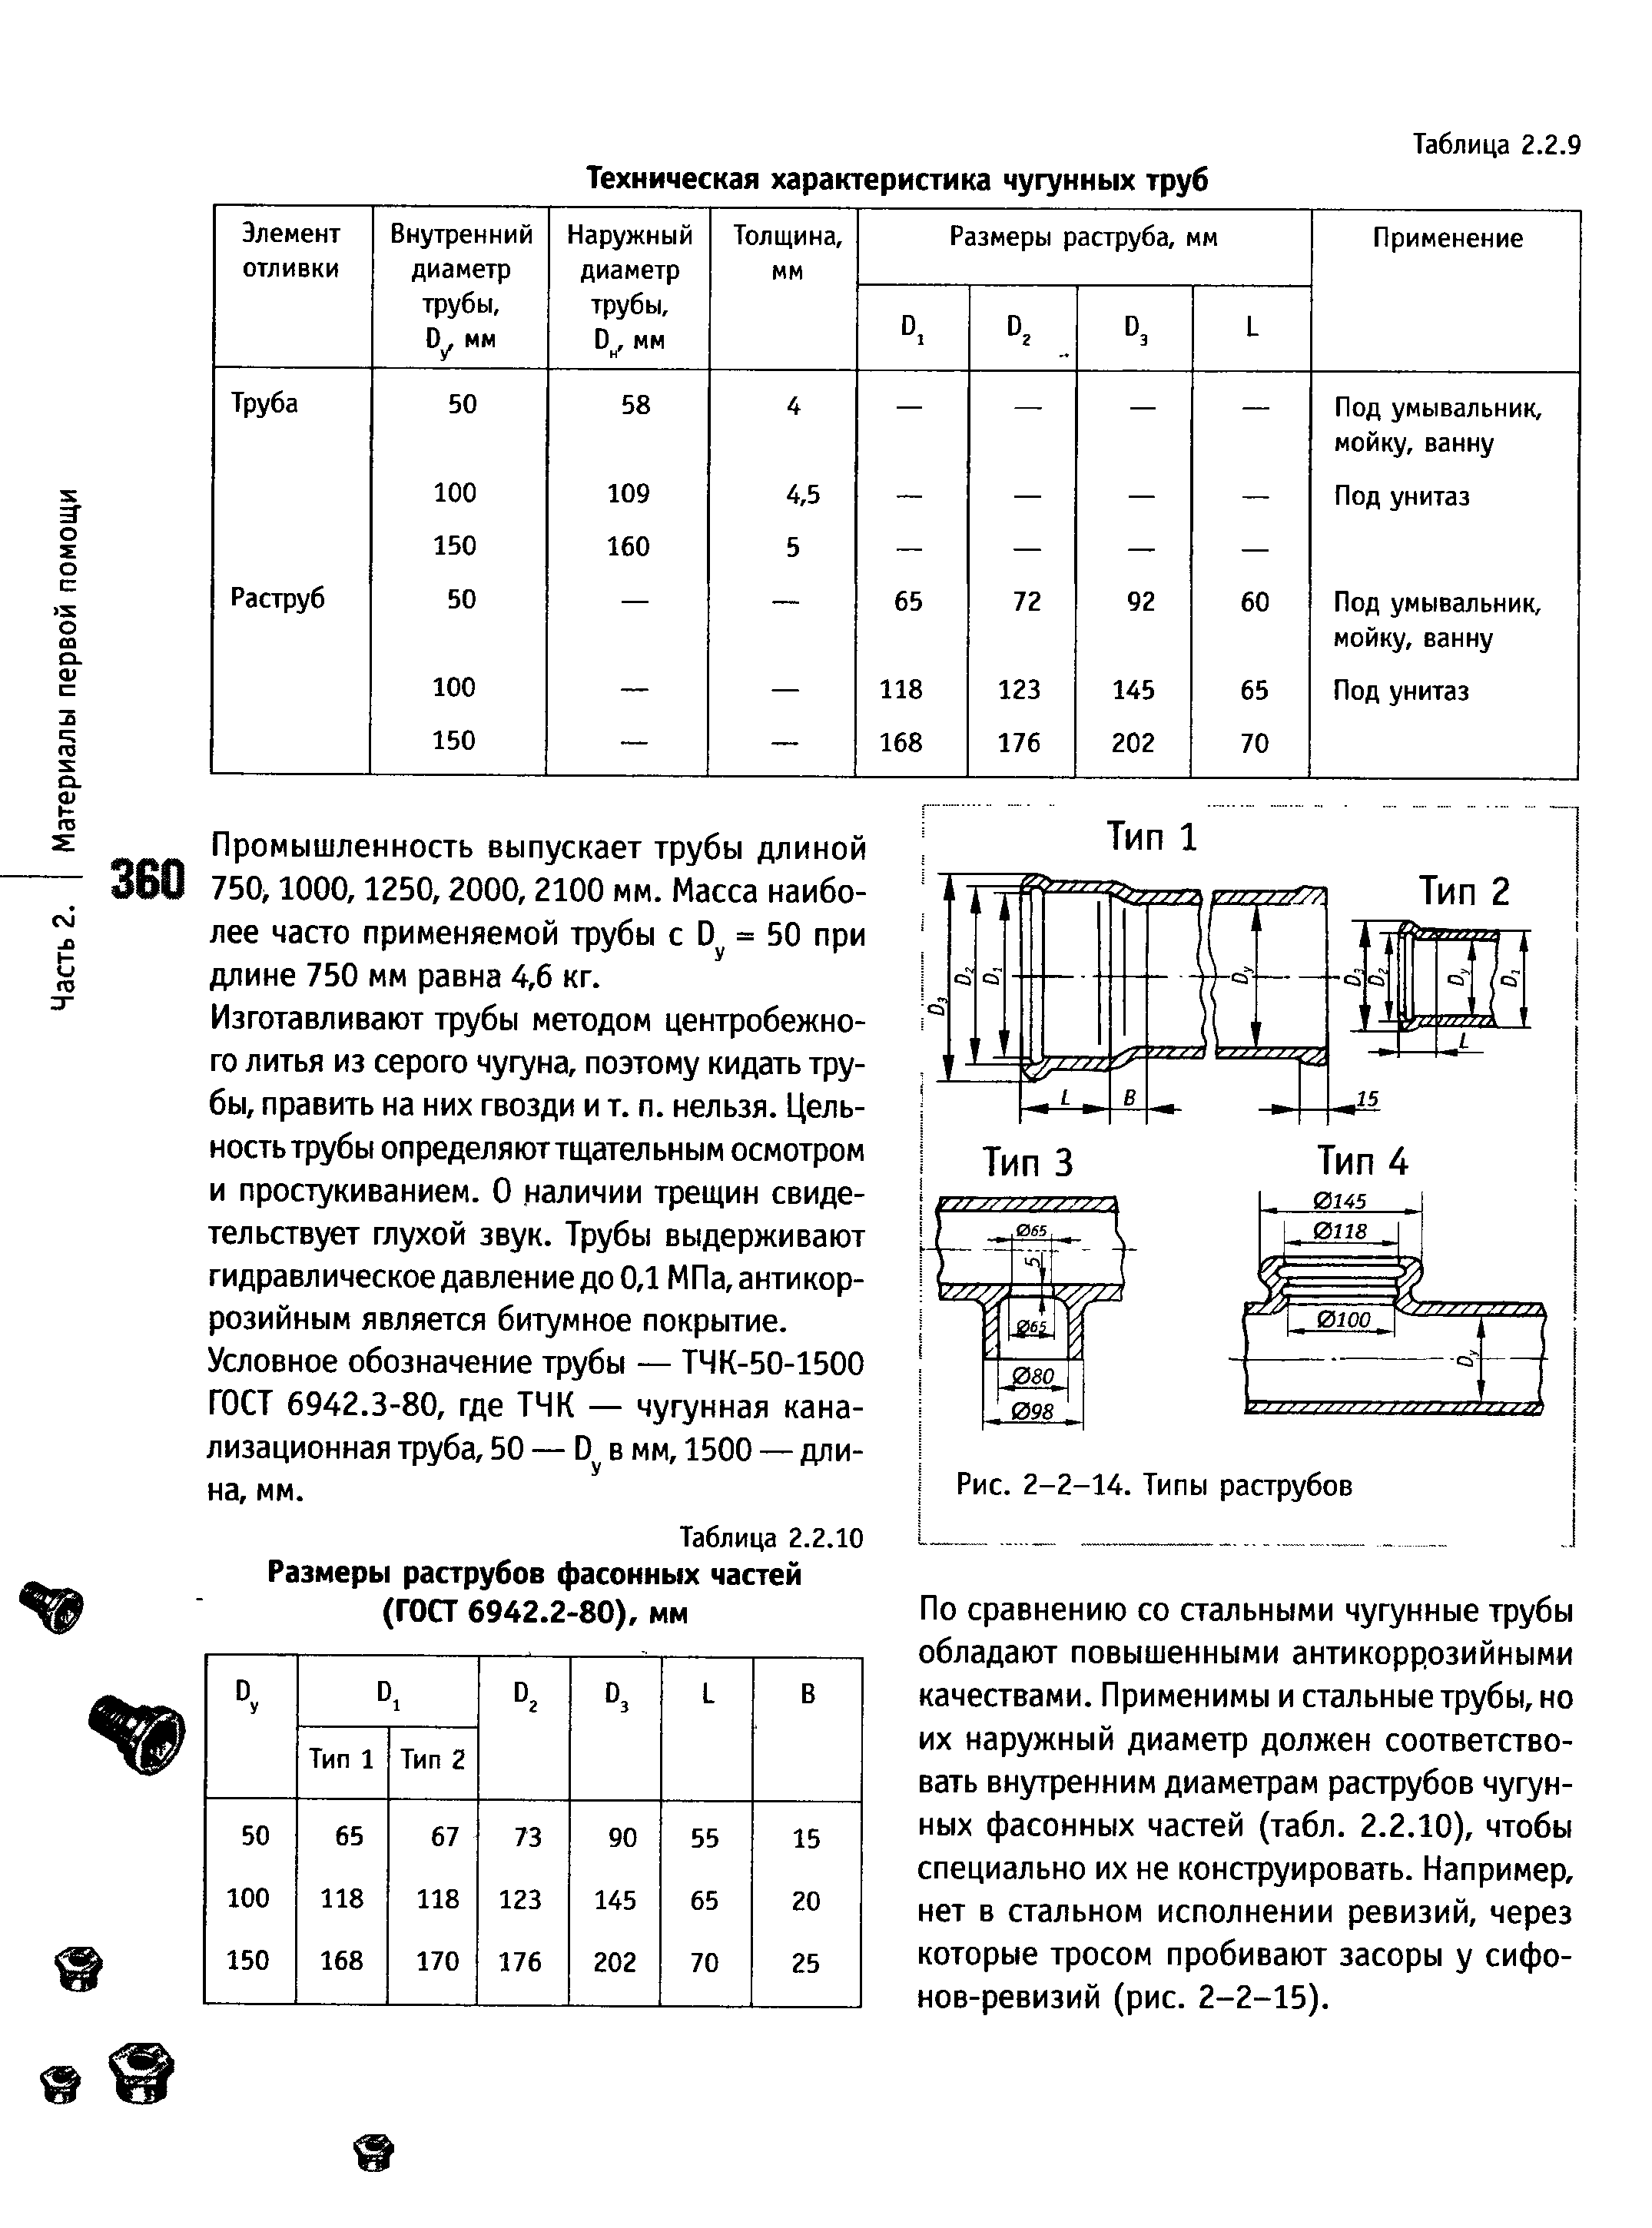 Таблица 2.2.10 Размеры раструбов фасонных частей (ГОа 6942.2-80), мм
